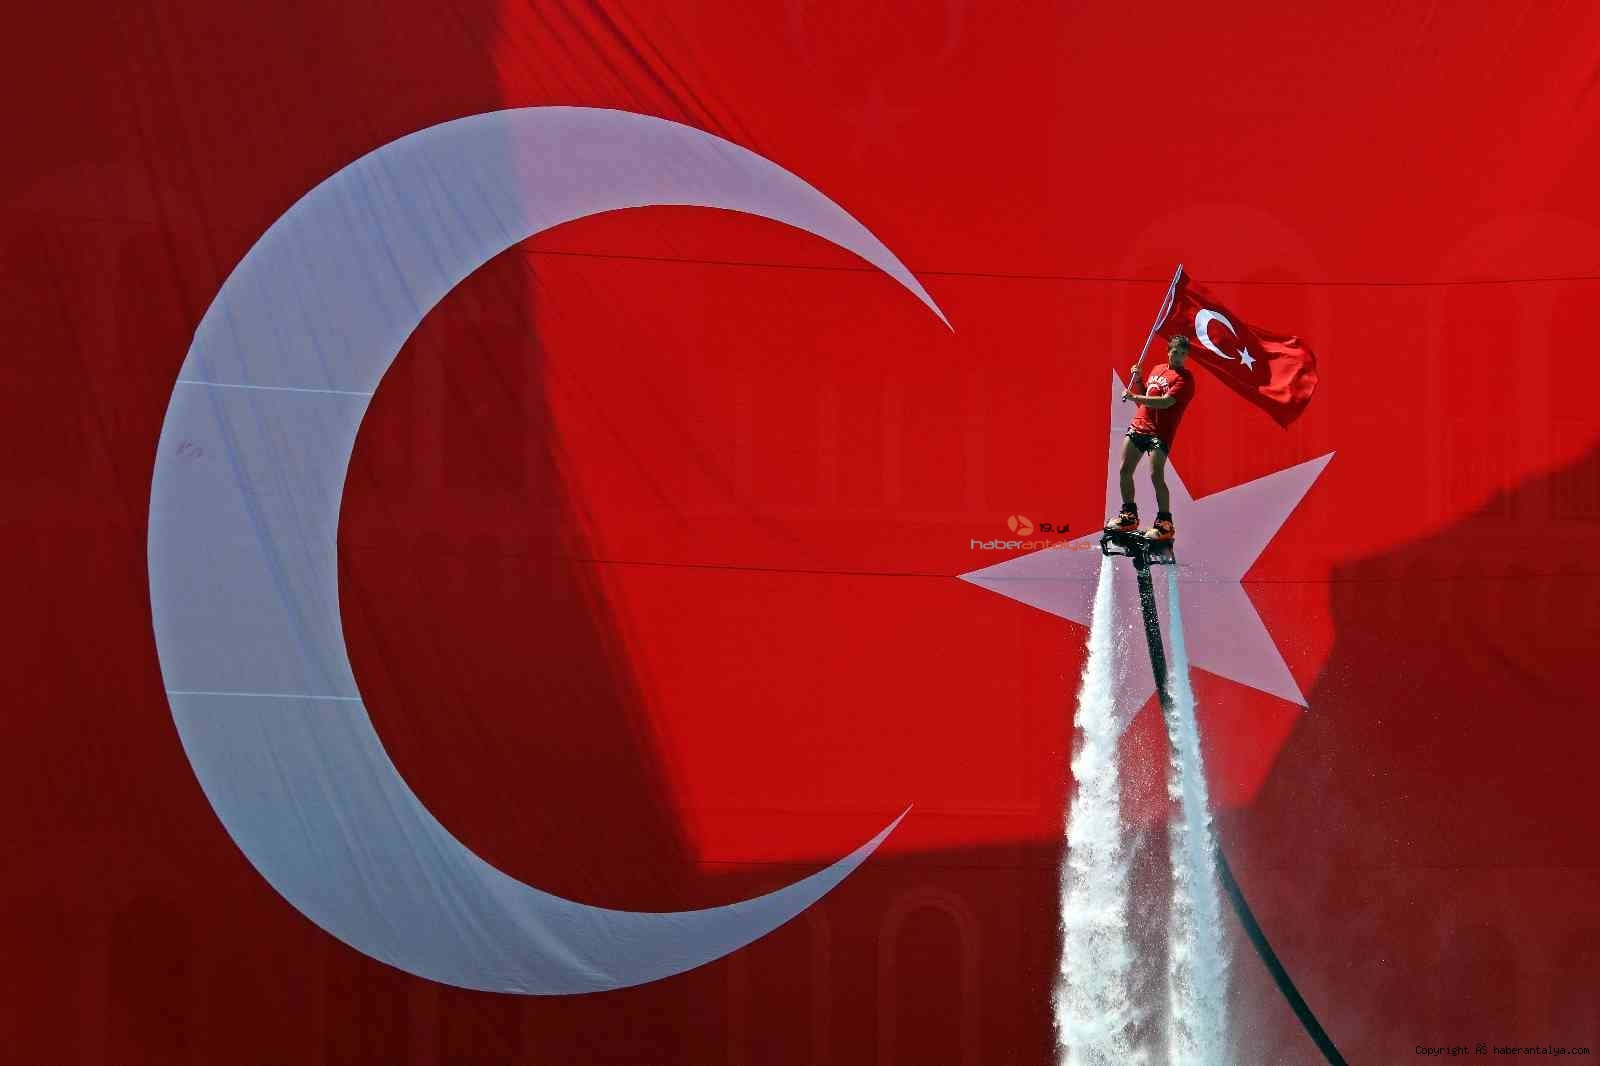 2022/08/hayran-birakan-turk-bayrakli-30-agustos-gosterisi-20220830AW70-1.jpg